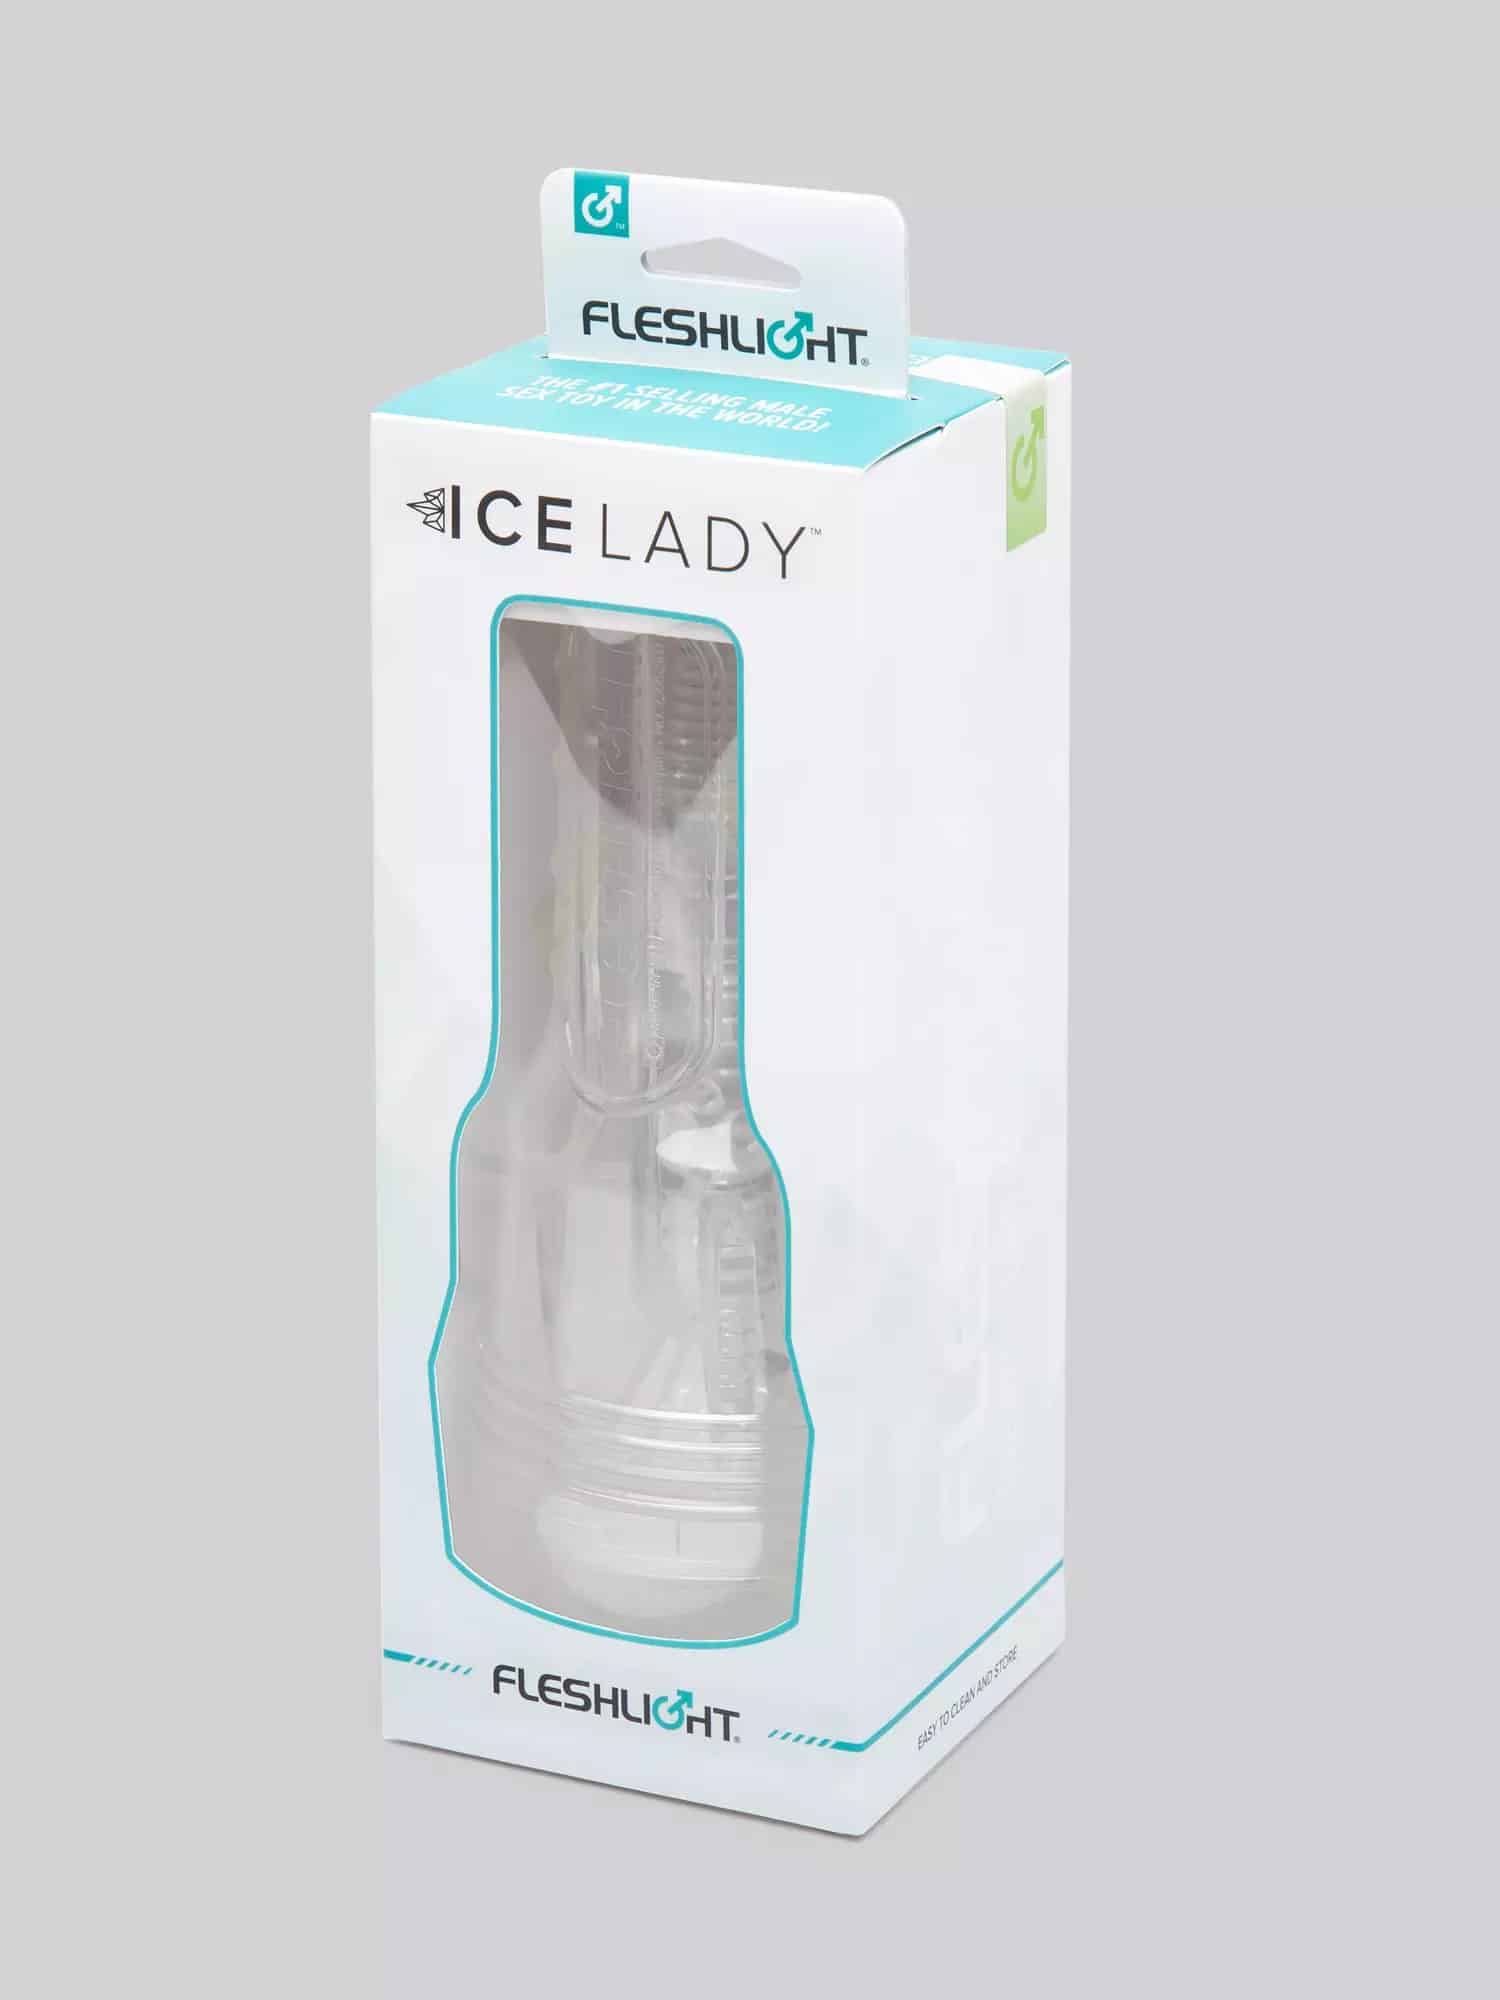 Fleshlight Ice Lady. Slide 13